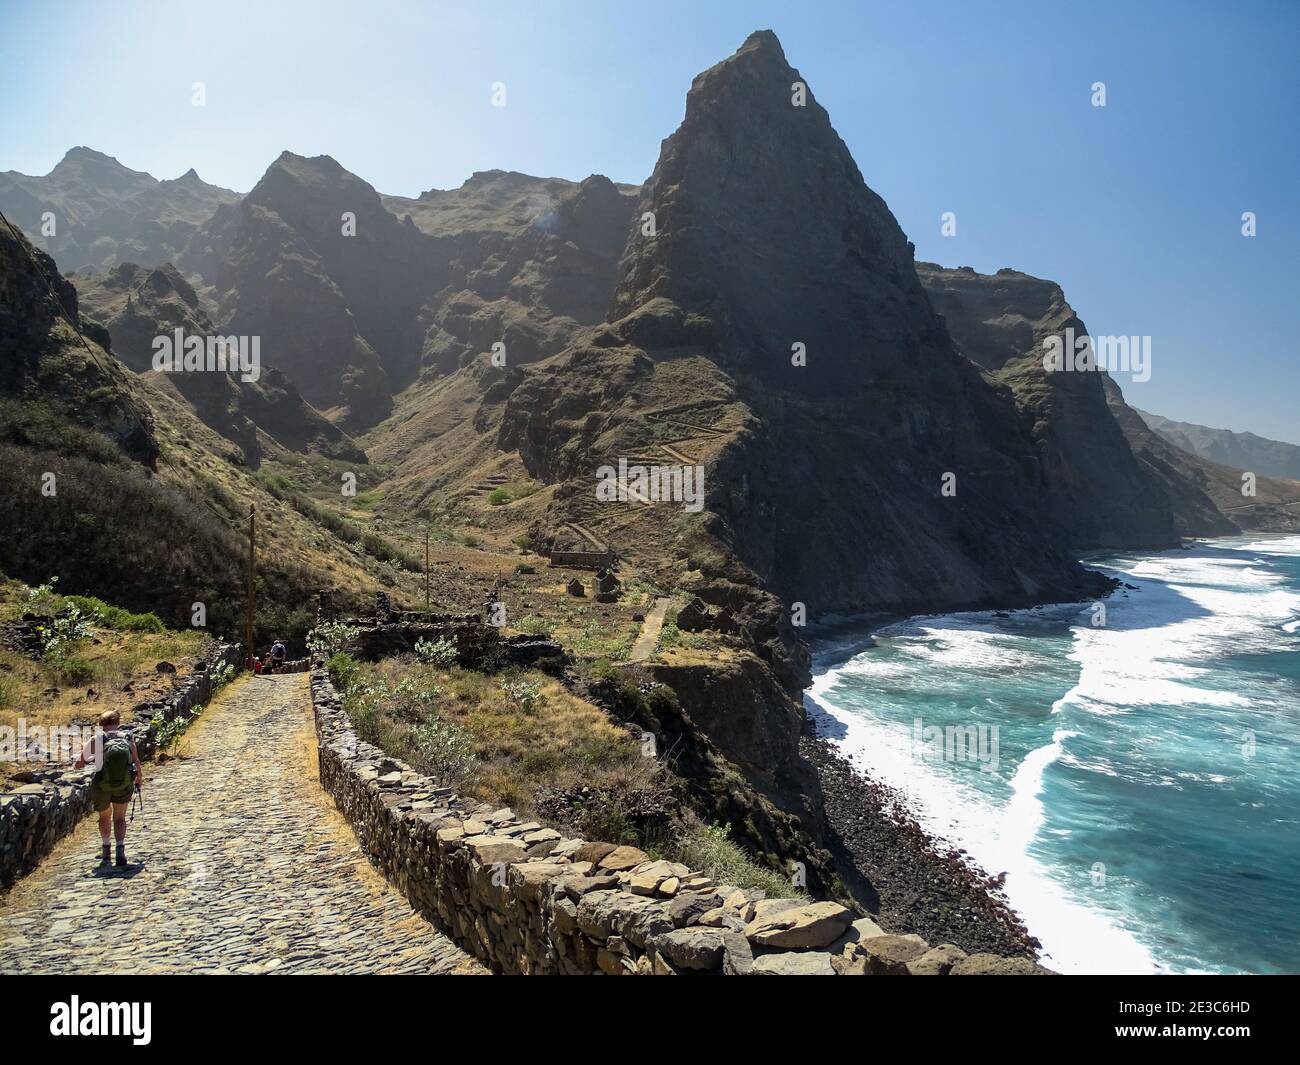 Cape Verde, Santo Antao island, travel, hiking, active, solo. Stock Photo